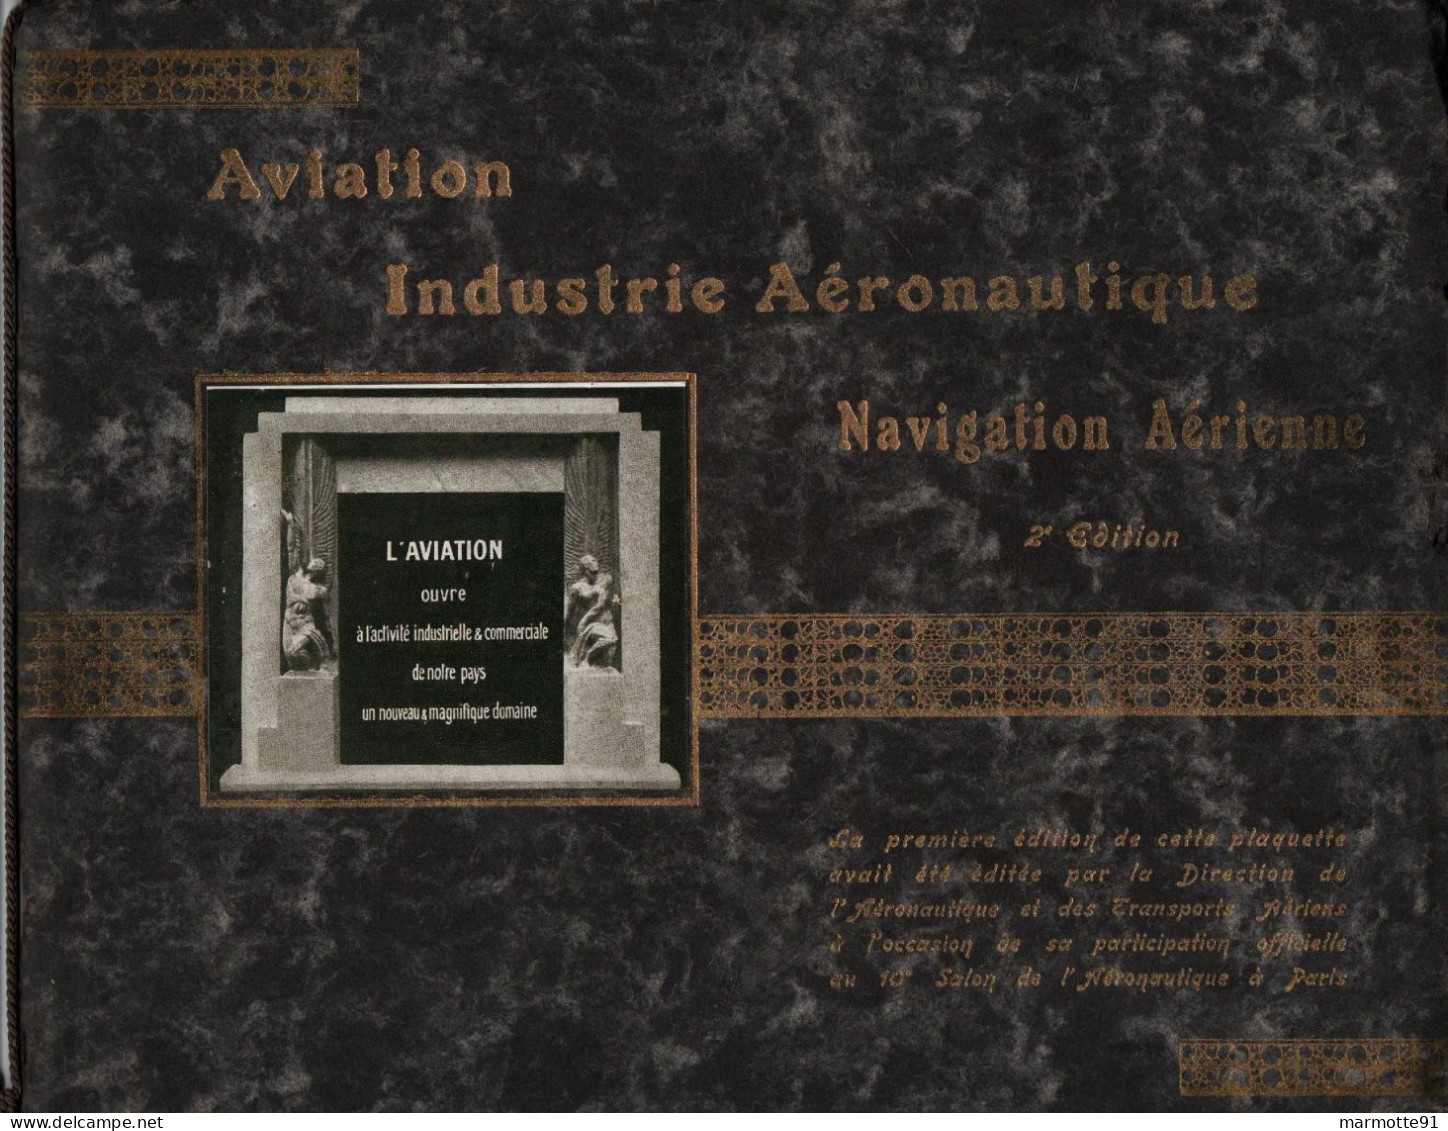 AVIATION INDUSTRIE AERONAUTIQUE NAVIGATION AERIENNE 2e EDITION  10e SALON AERONAUTIQUE PARIS - Flugzeuge